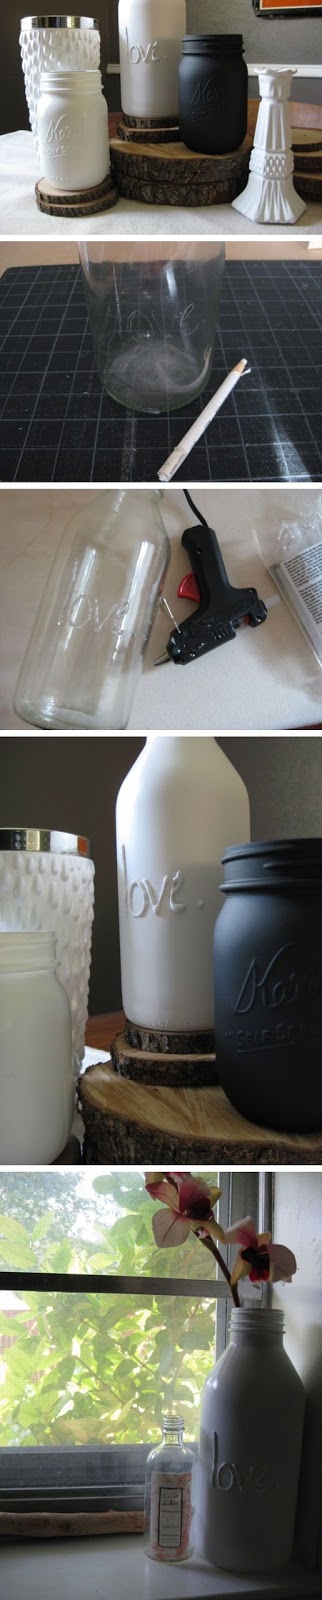 DIY botellas decorativas para tu hogar